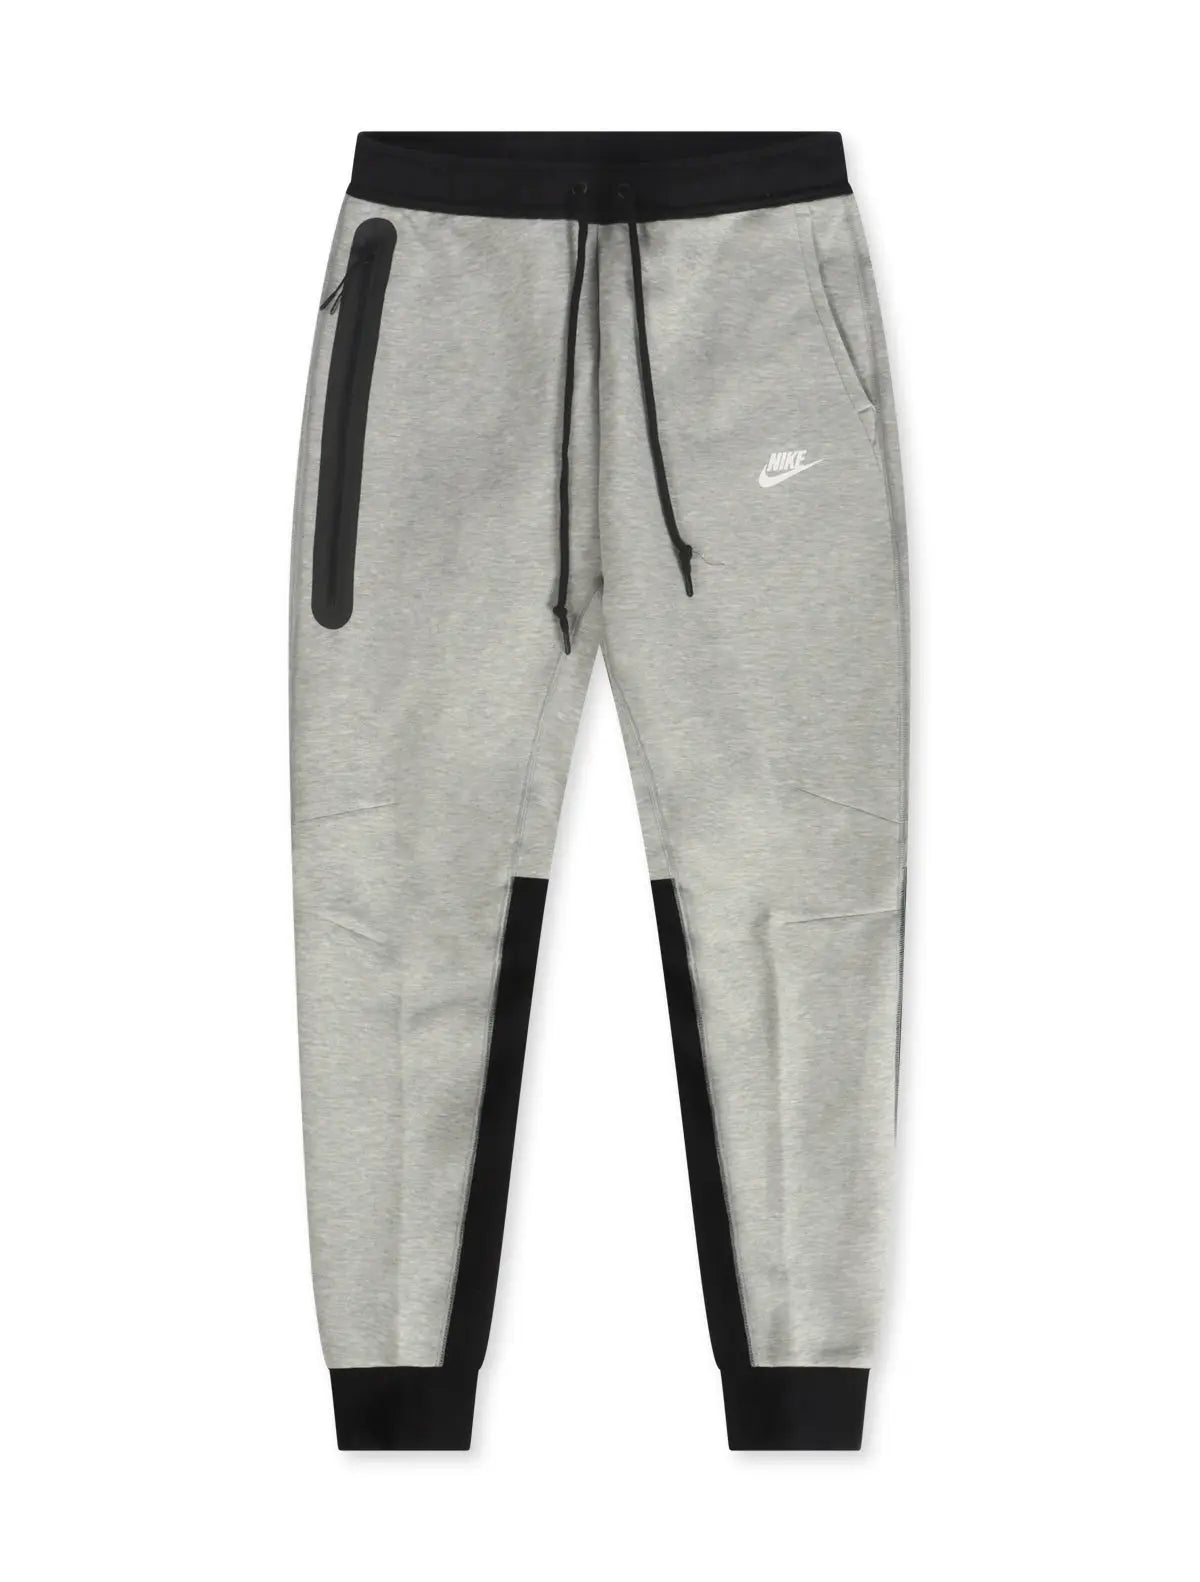 Nike Tech Fleece Slim Fit Joggers Pants Black Grey Mens Sz 3XL